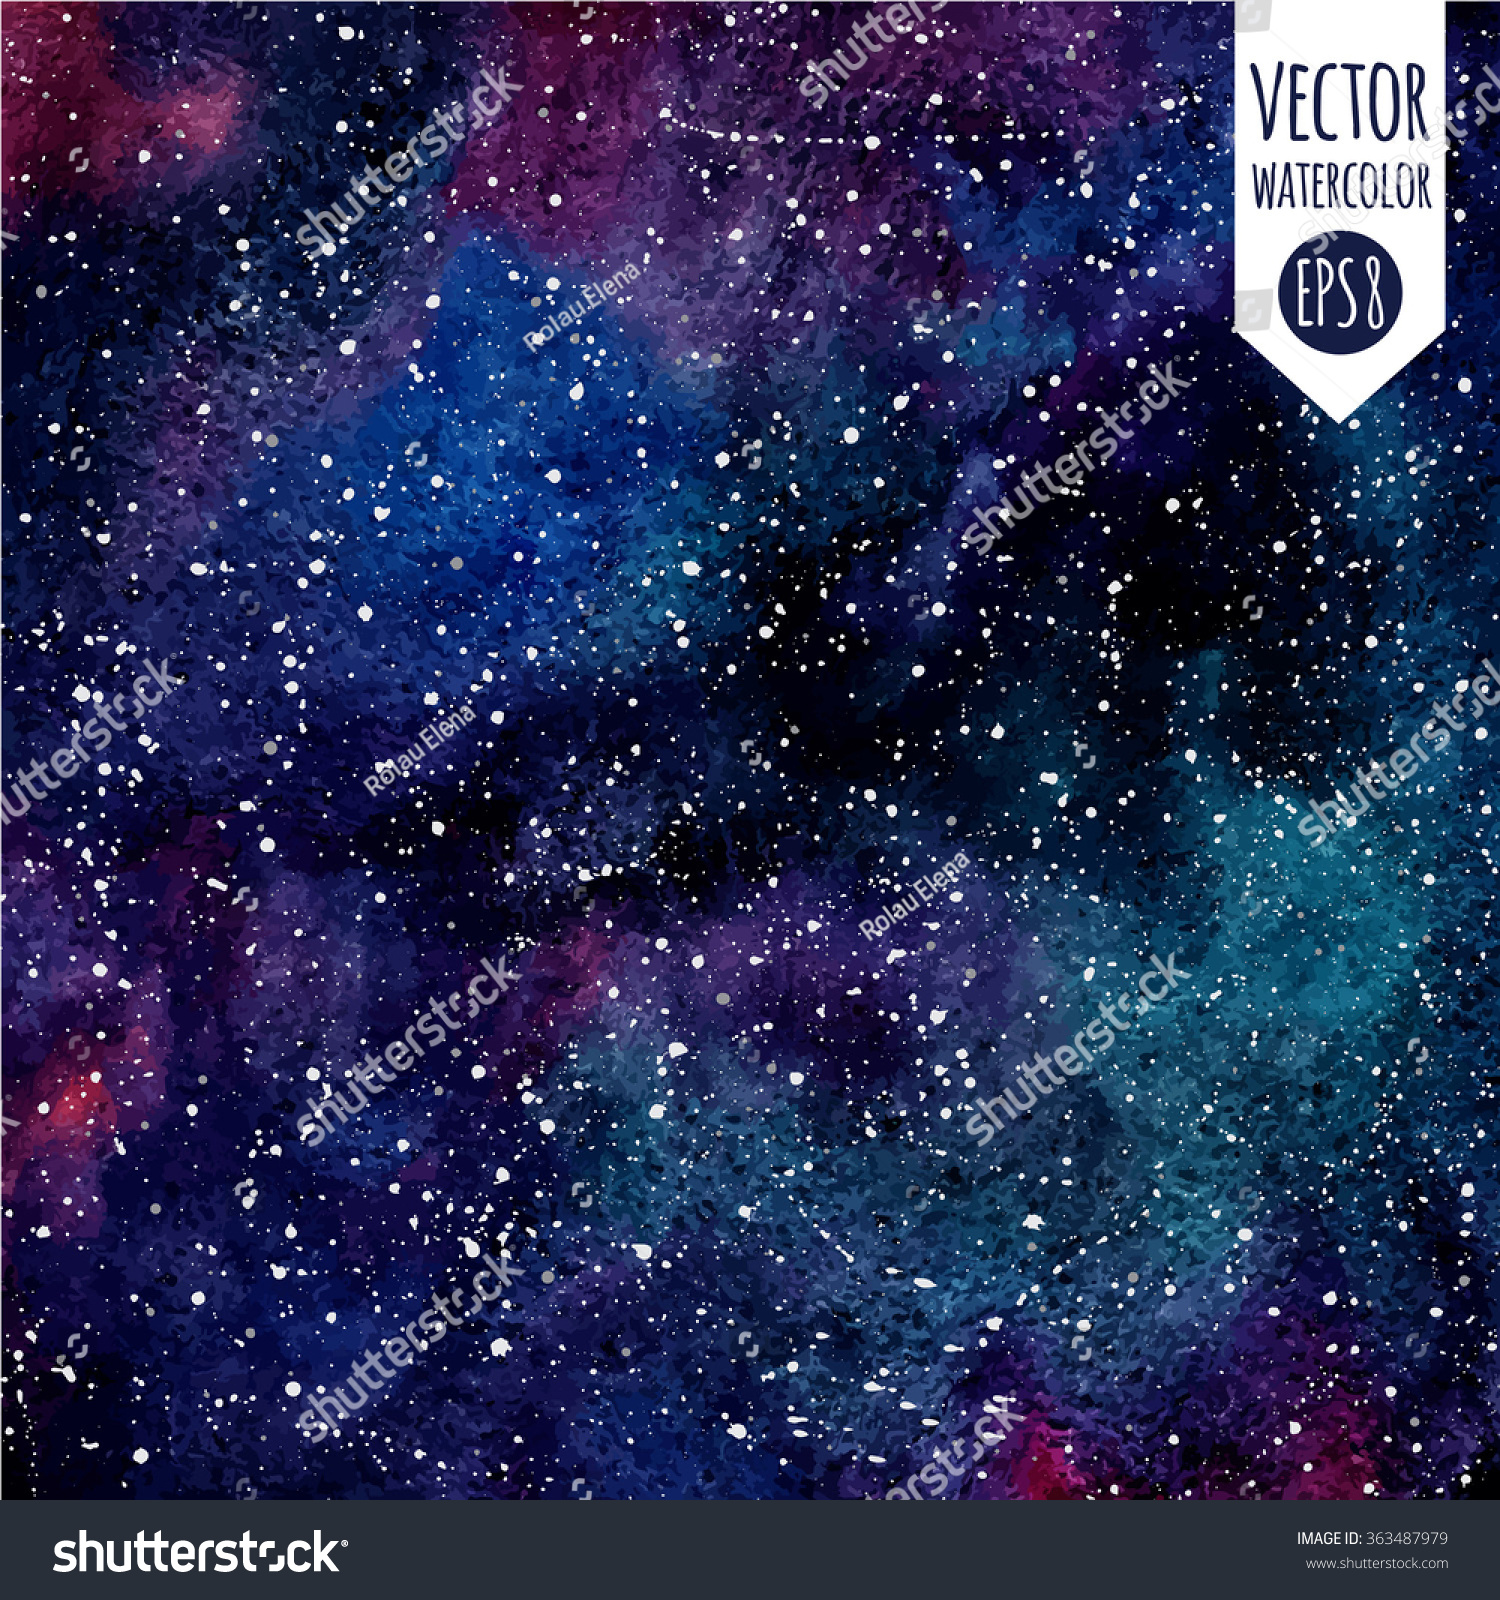 Cosmic Background Colorful Vector Watercolor Galaxy Stock Vector ...